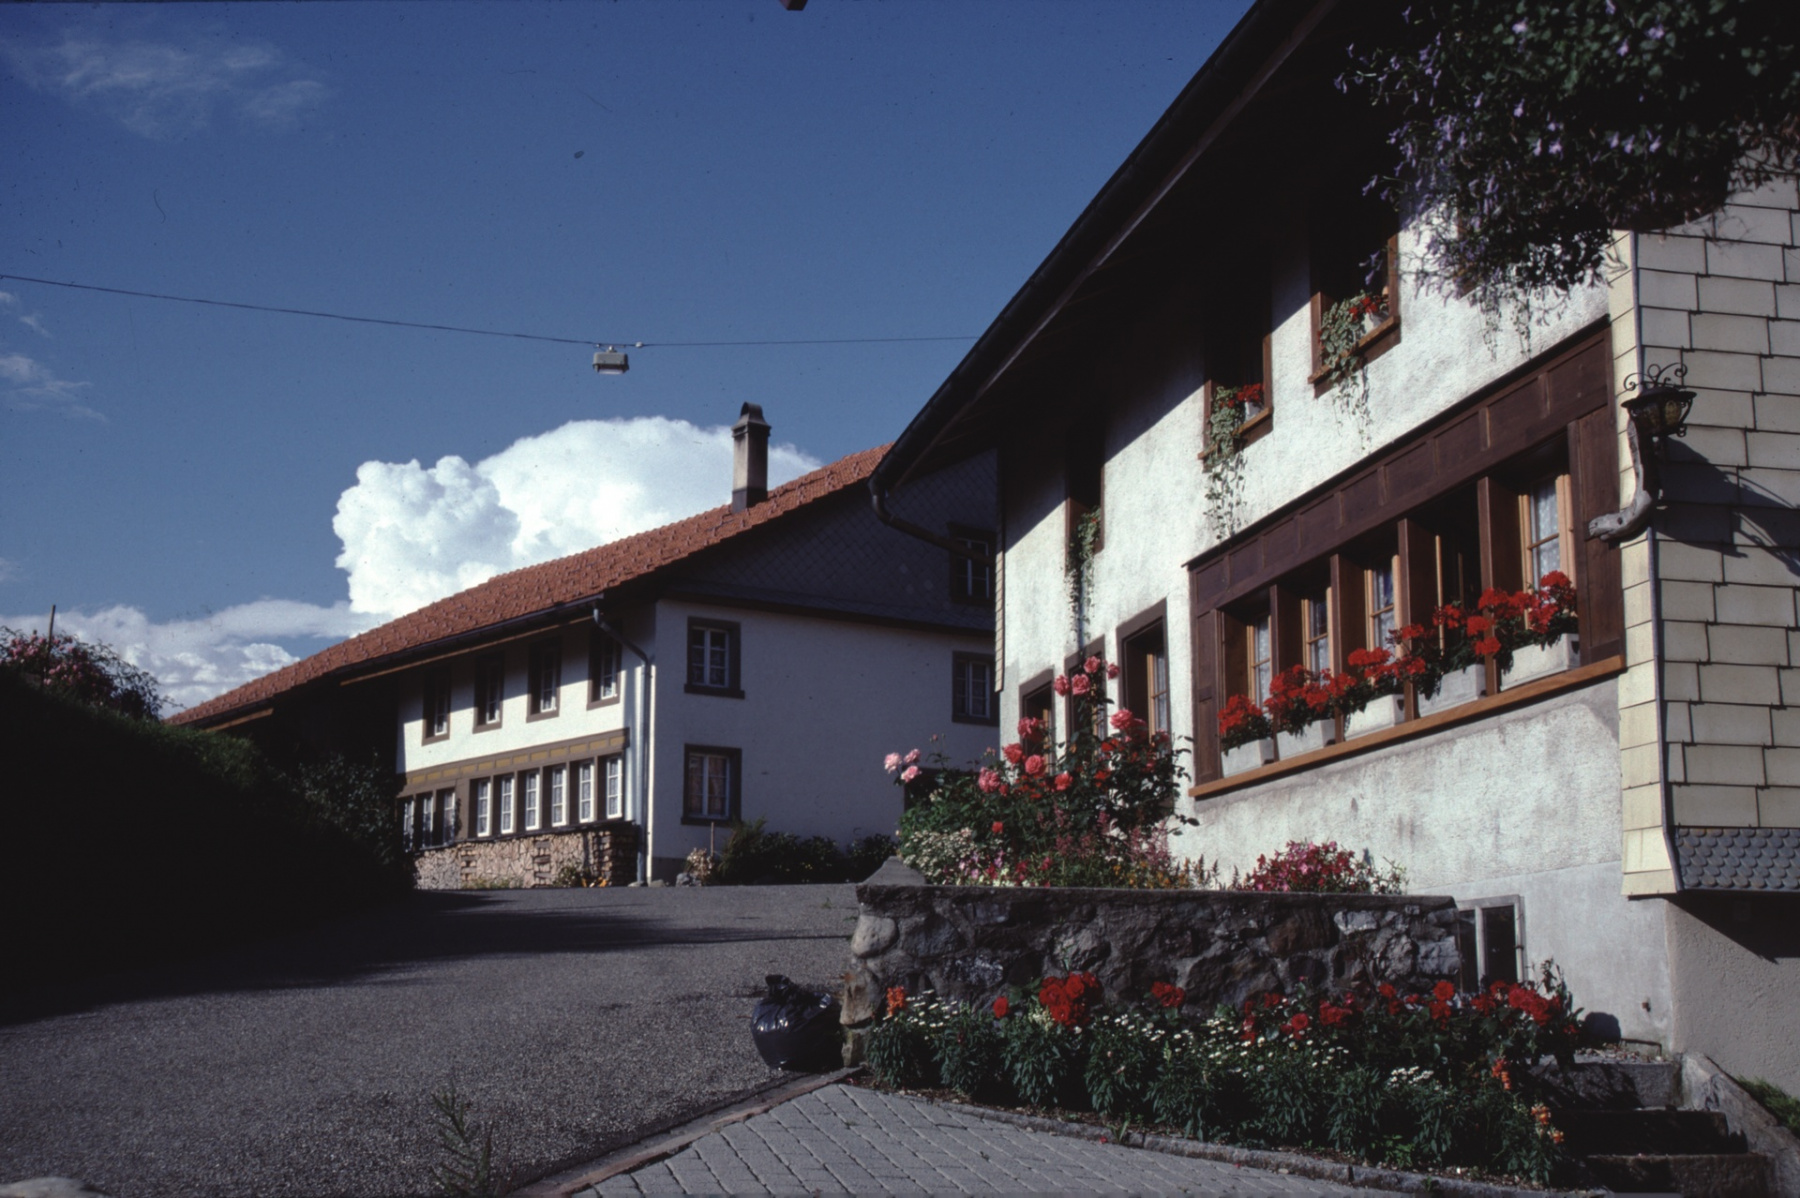 Häuser Allenberg (Gebäude links früher Ski-Hütte)